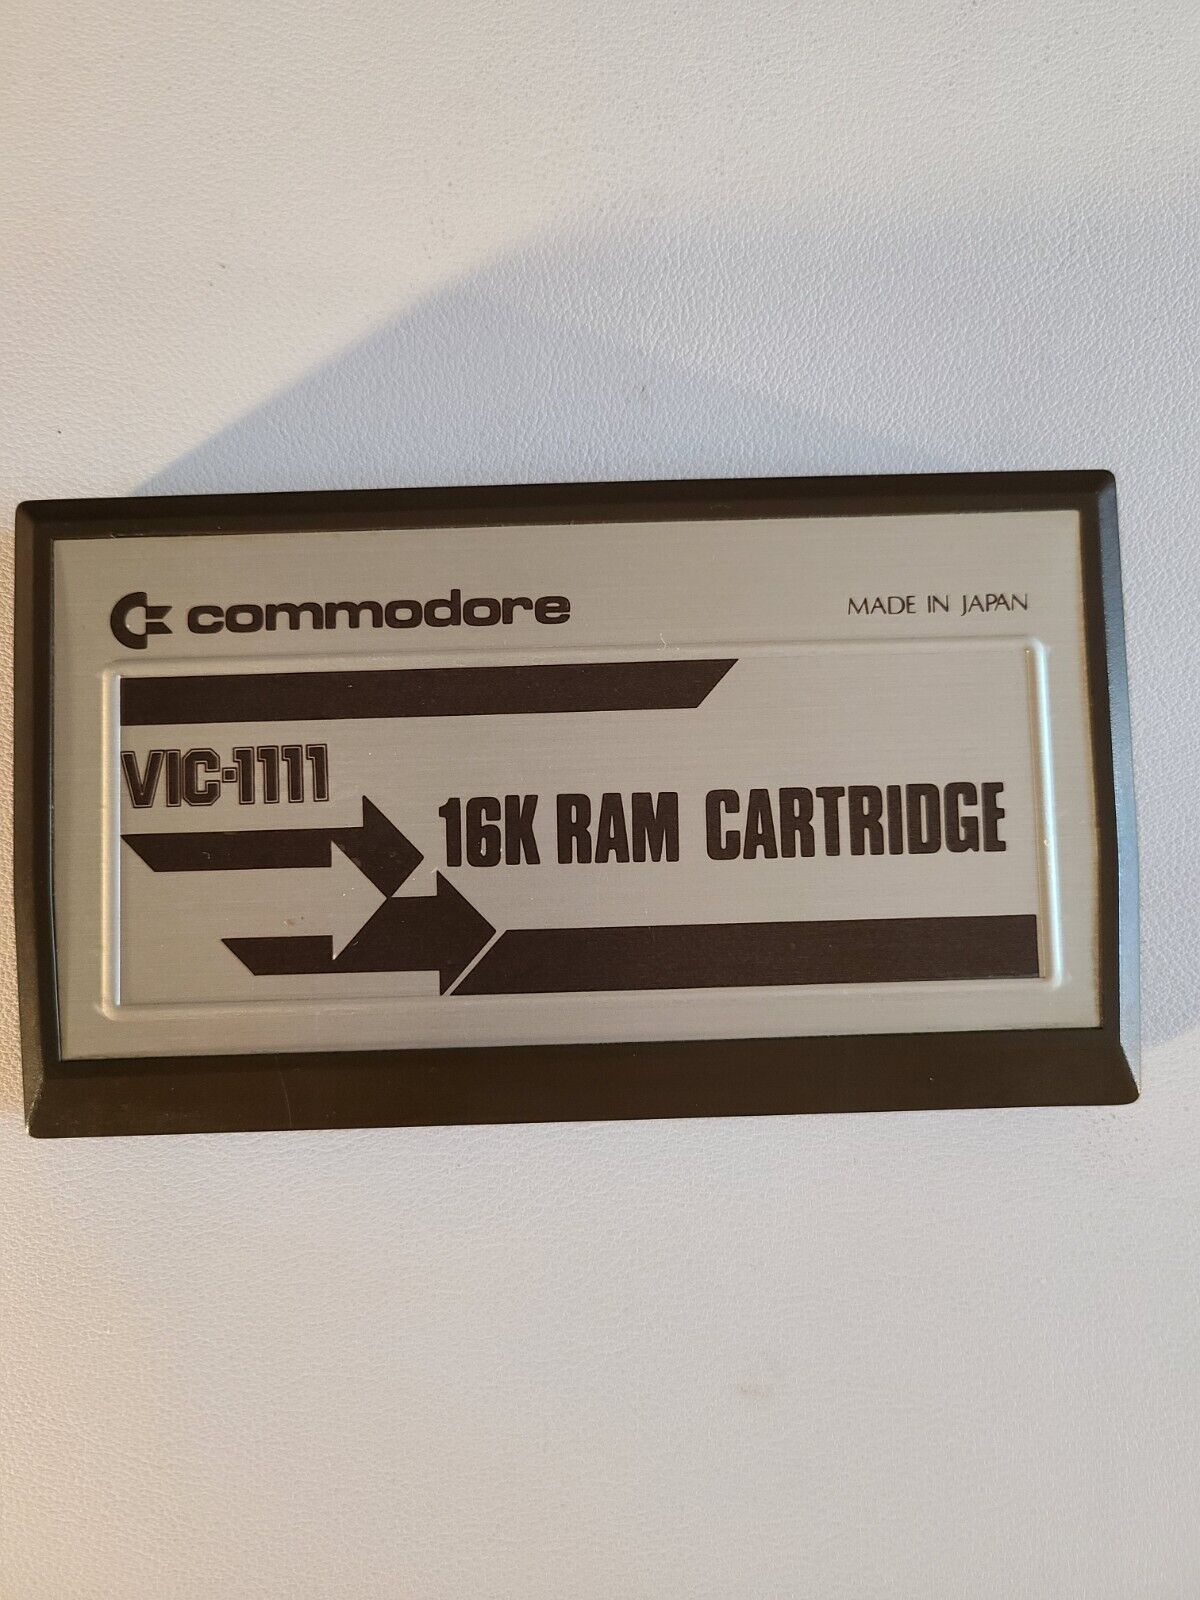 VIC-20 16K RAM Cartridge VIC-1111 - Working (No box, cartridge only)